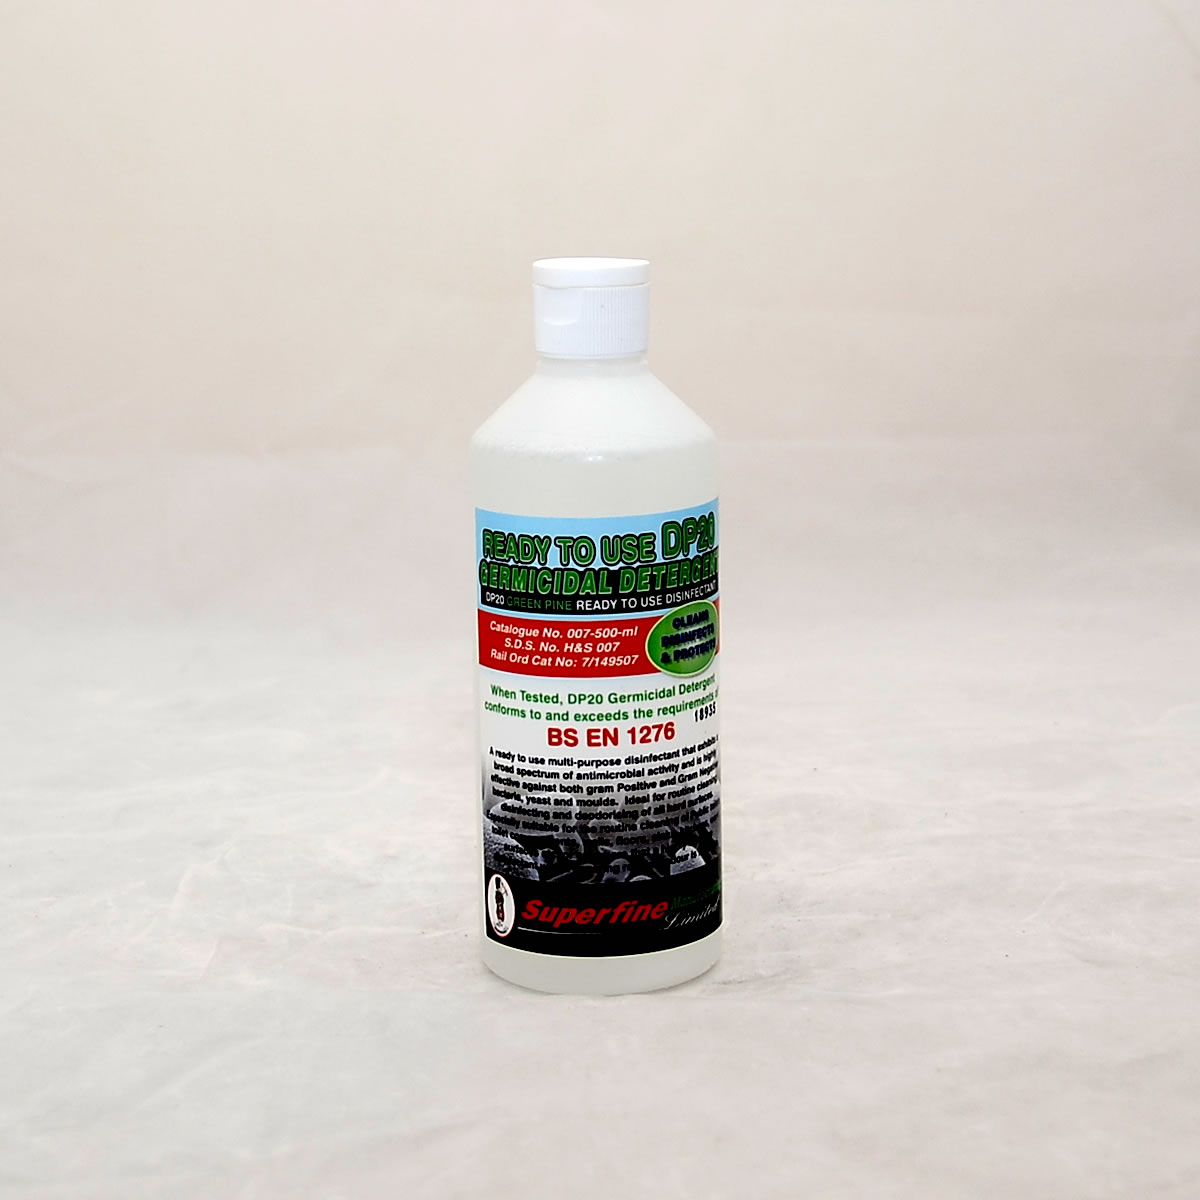 DP20 Disinfectant Deodoriser Green Pine 500ml Cat: 7/149507